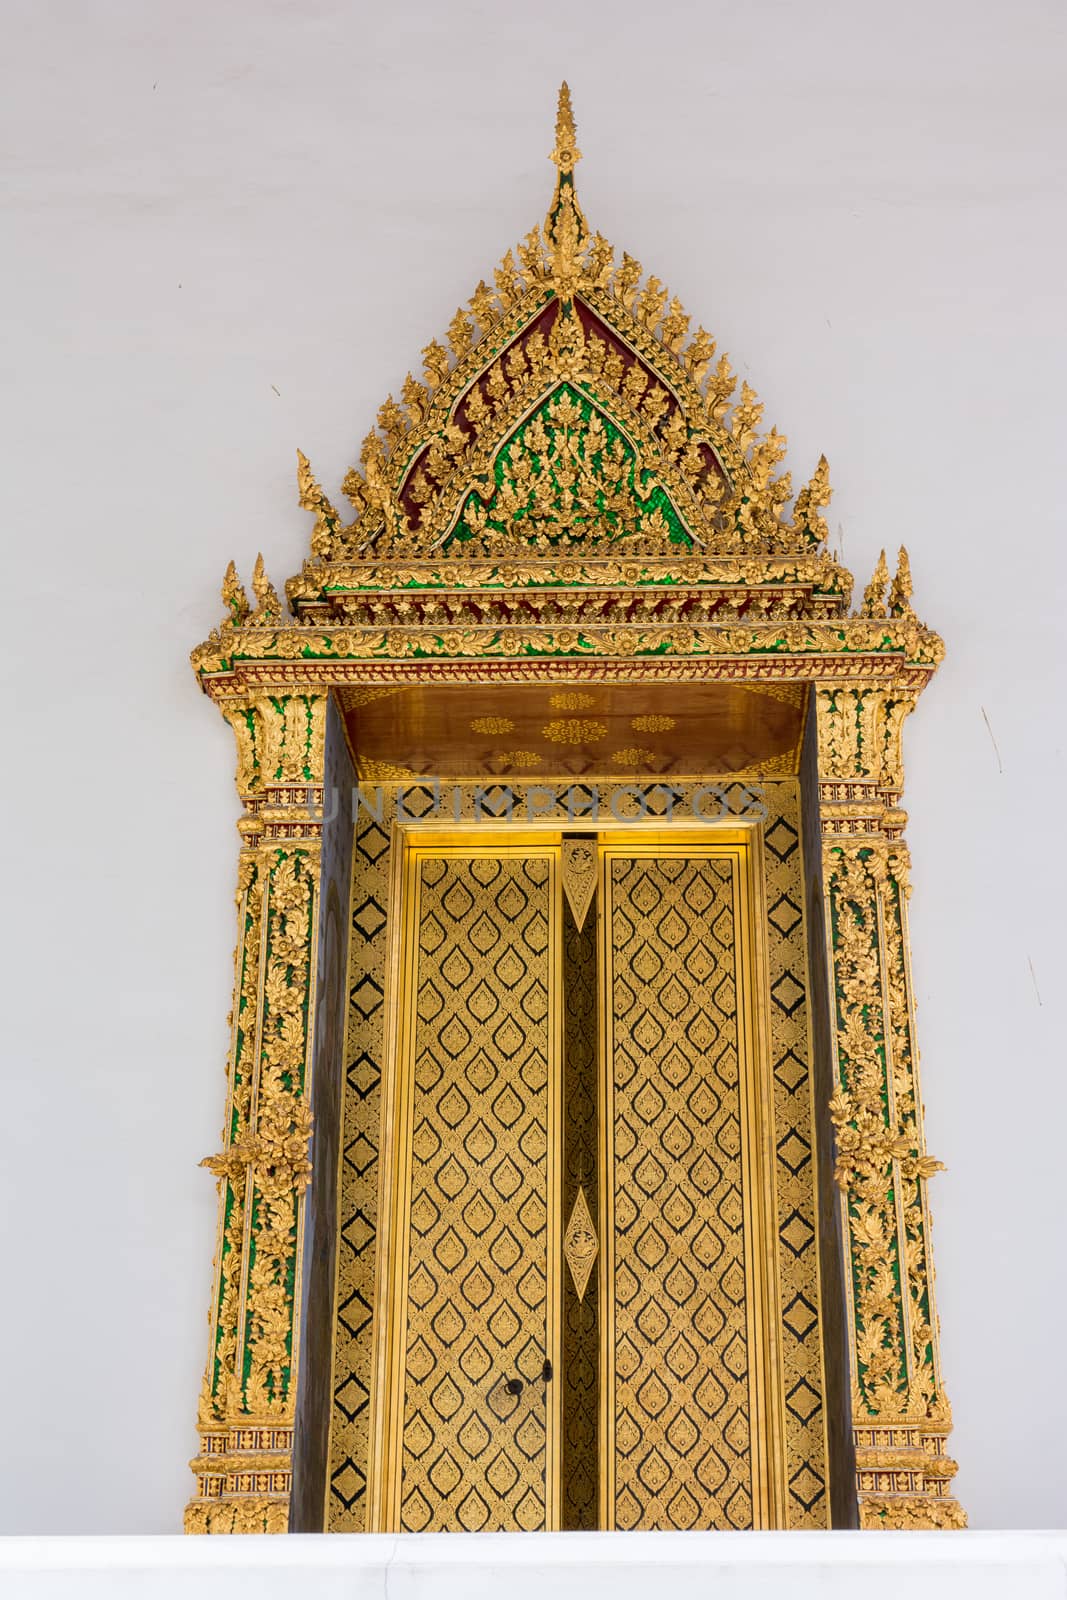 Wat Ratchanatdaram (Loha Prasat) by nicousnake